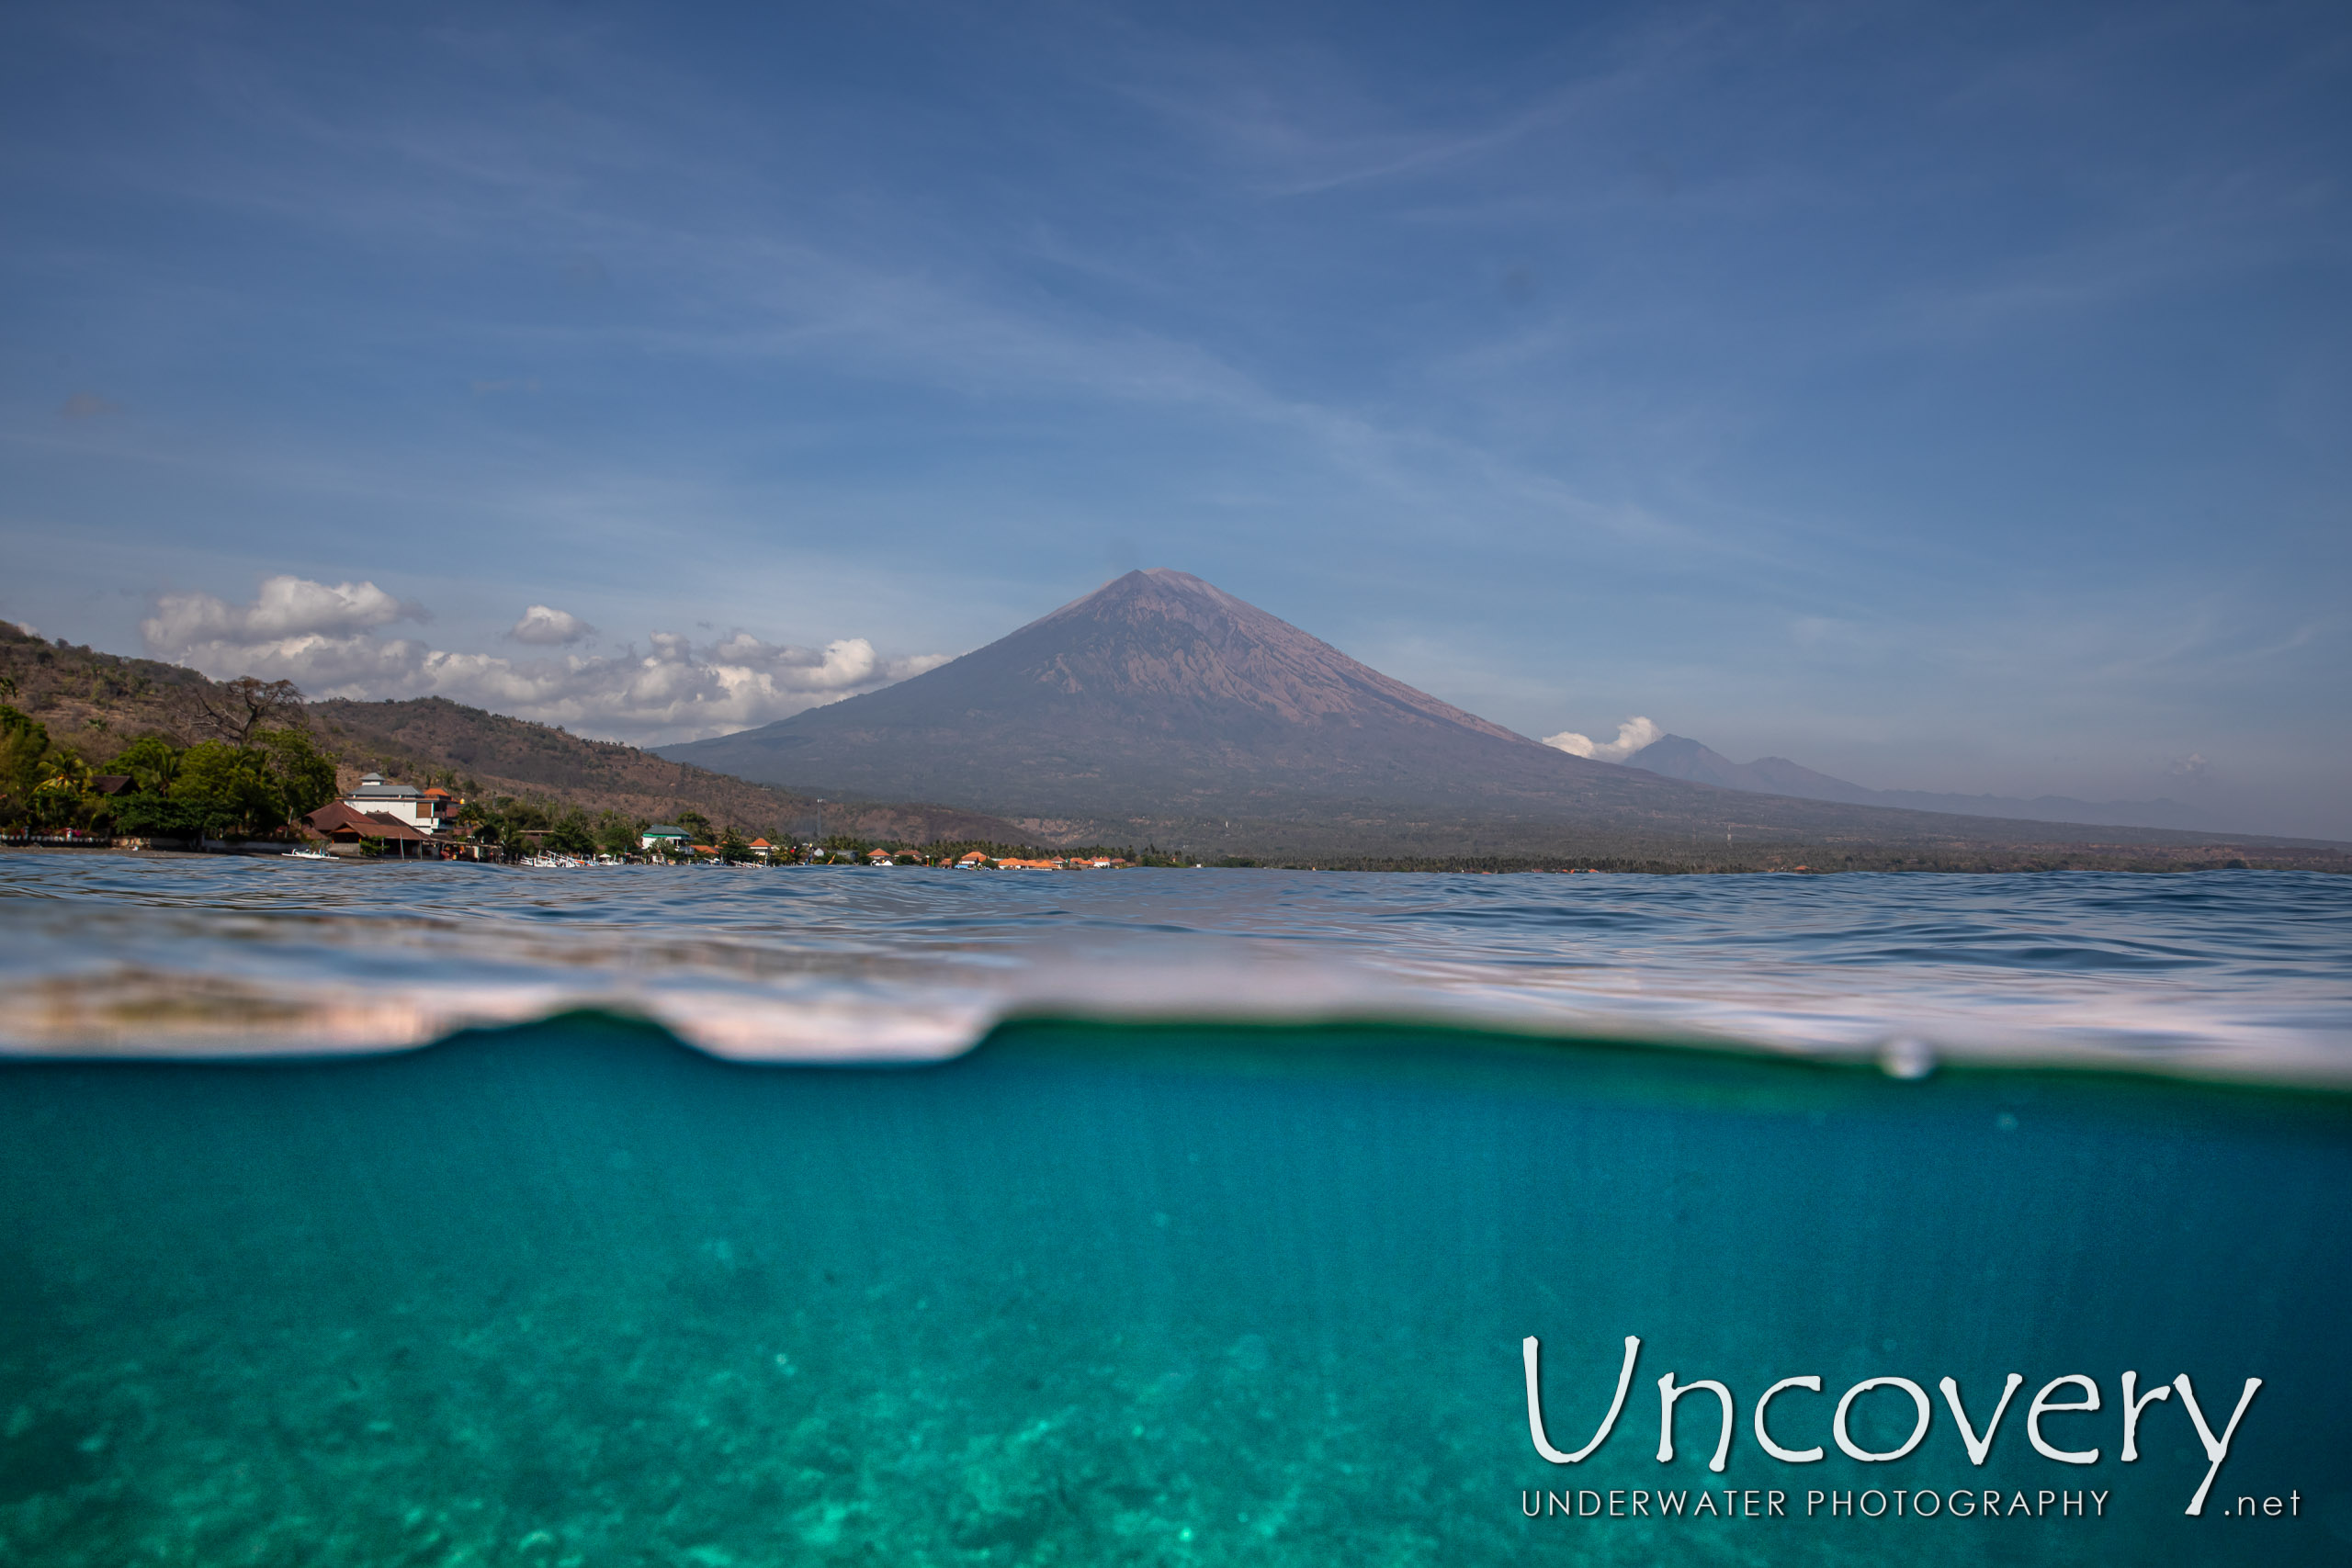  shot in Indonesia|Bali|Tulamben|Pyramids